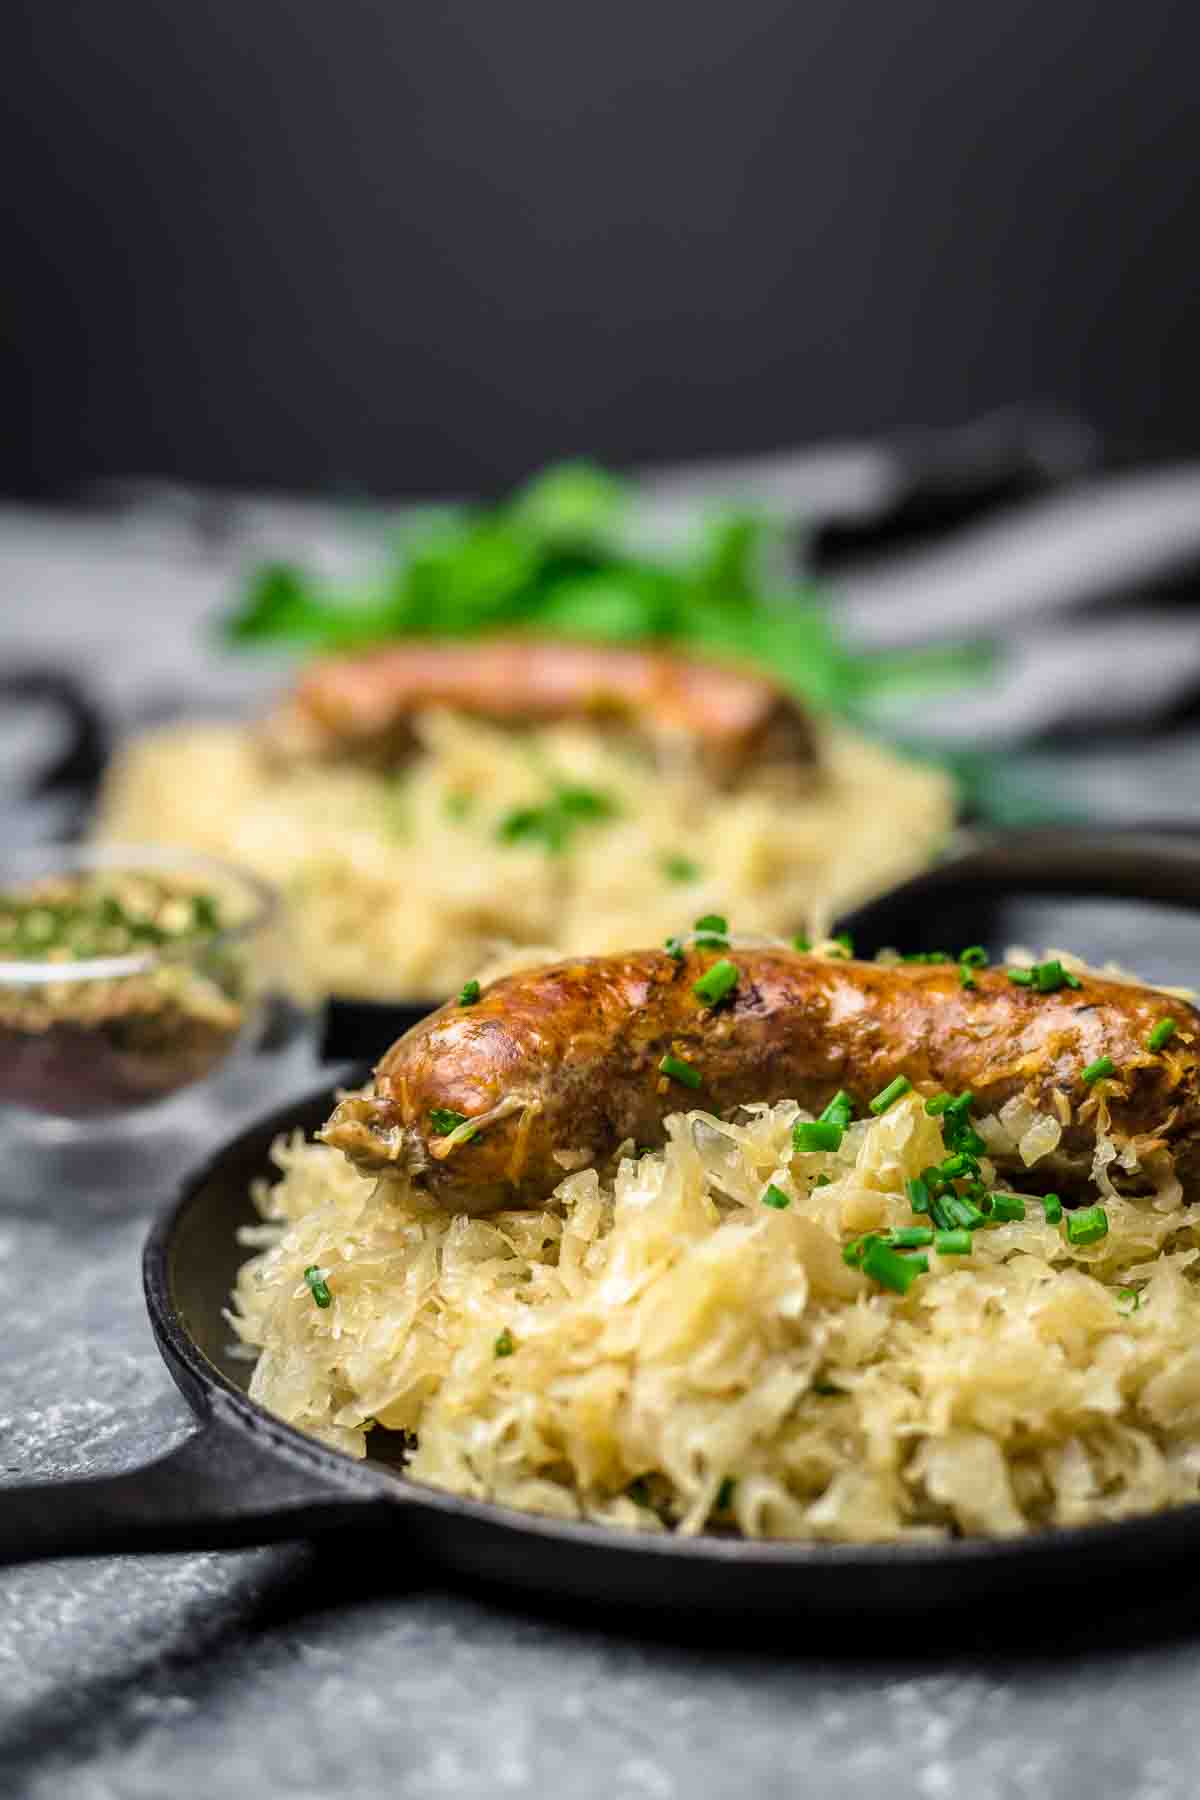 German Sausage Recipe with sauerkraut in a pan.